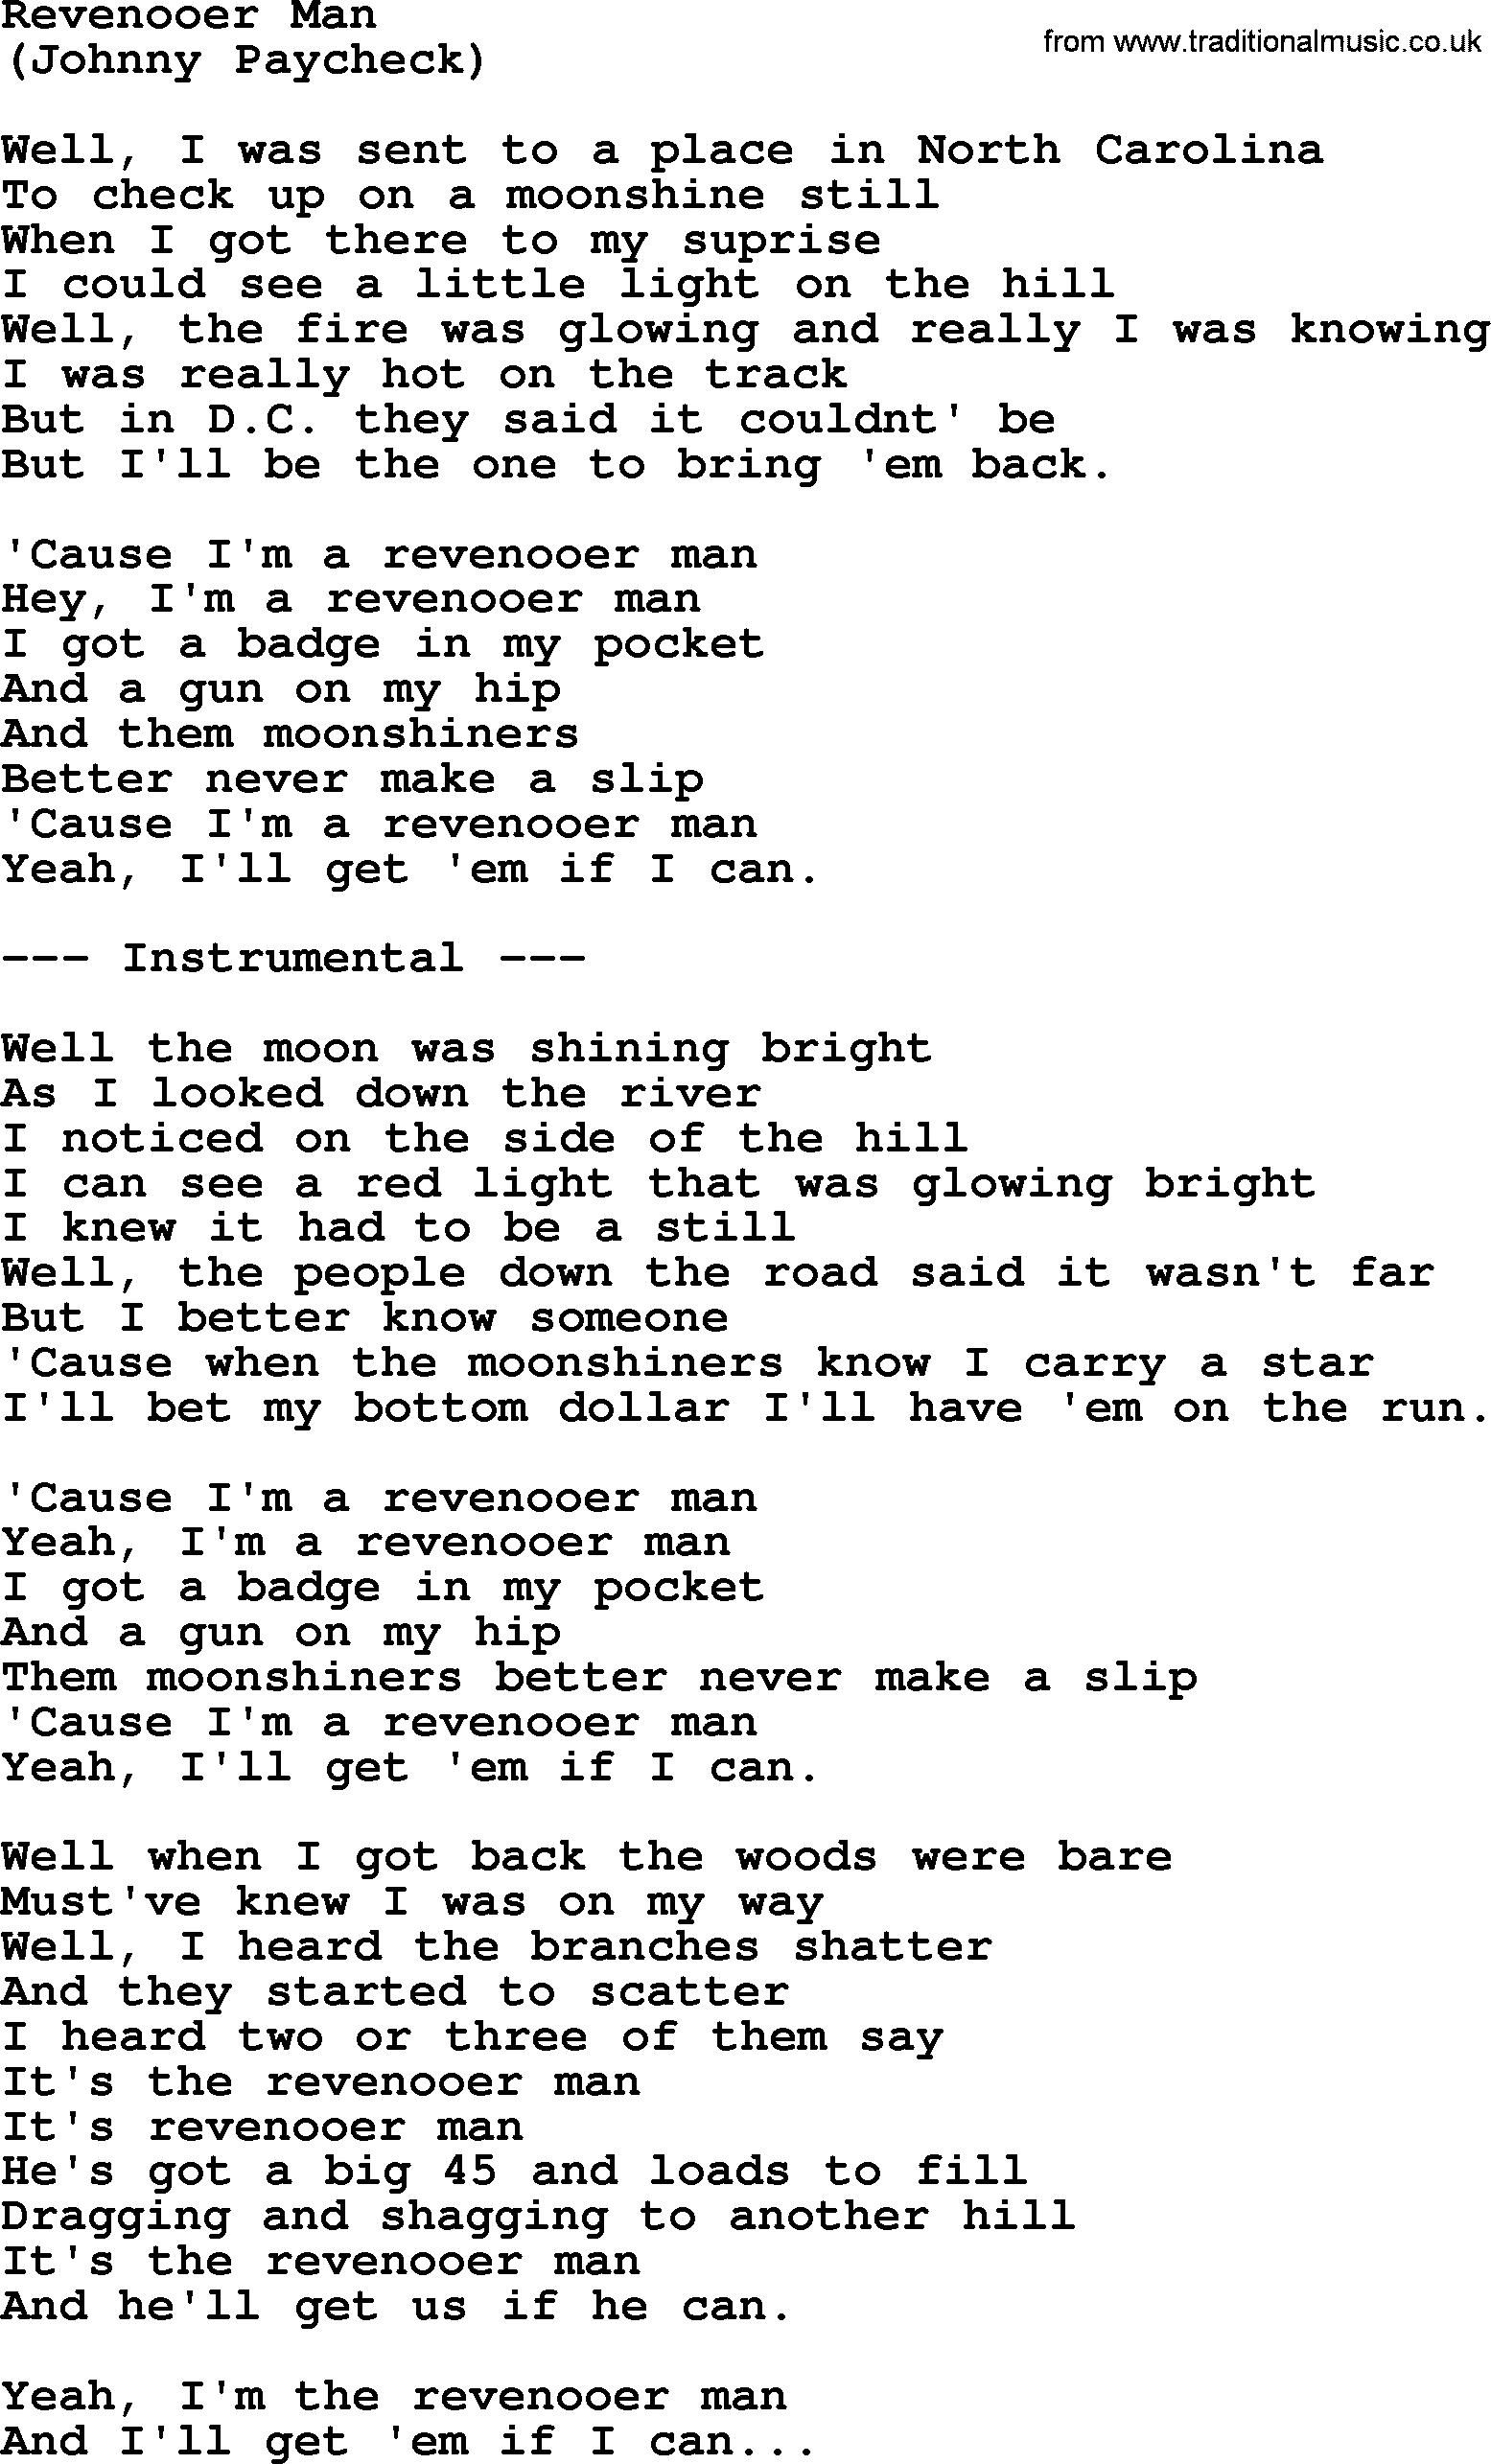 George Jones song: Revenooer Man, lyrics